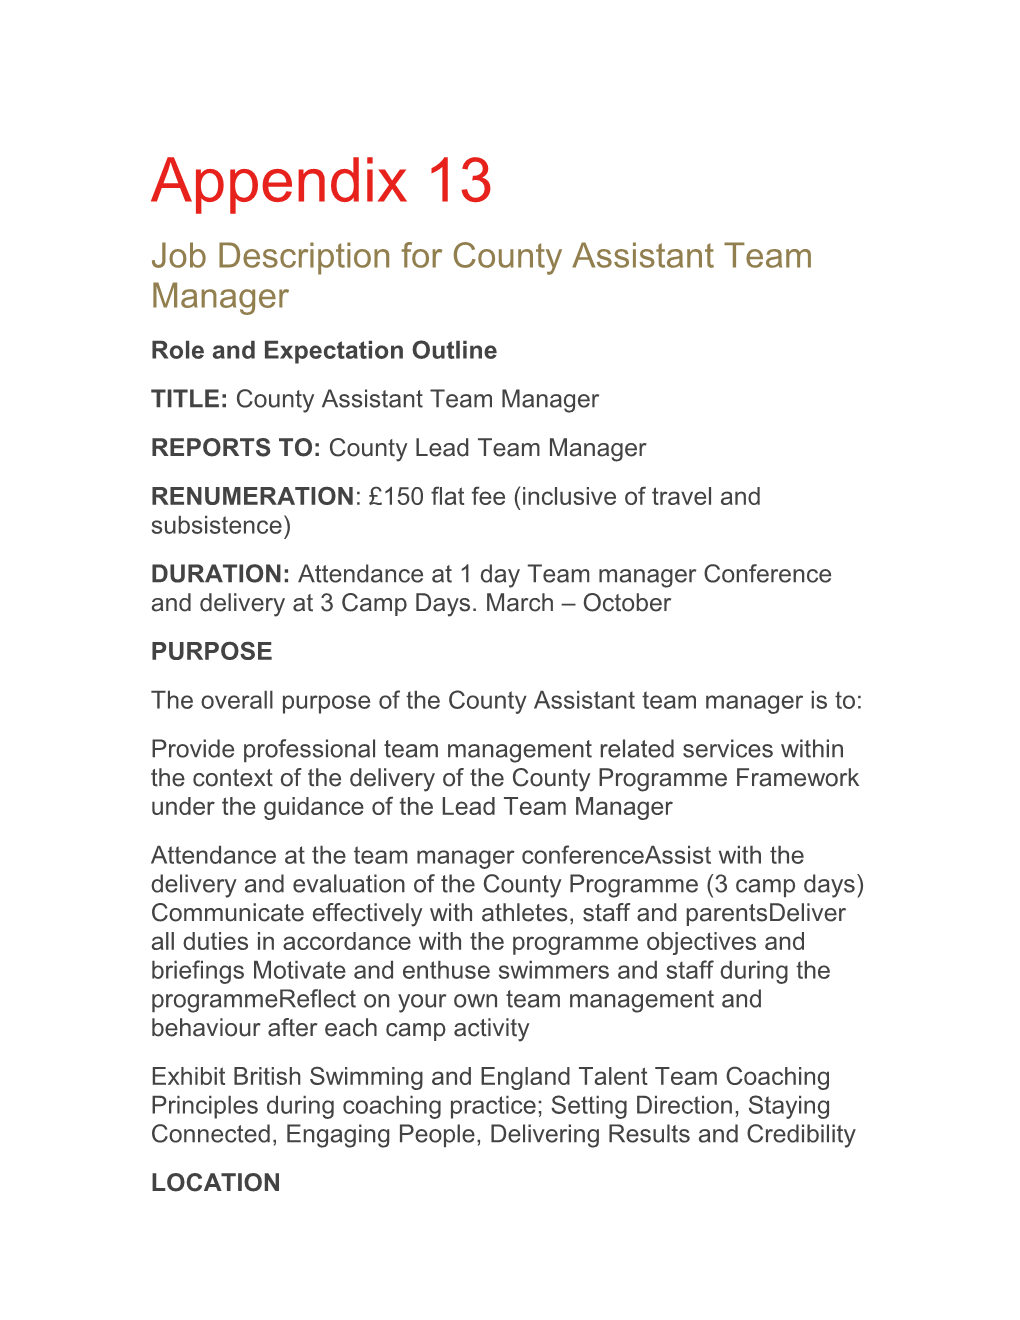 Job Description for County Assistant Team Manager